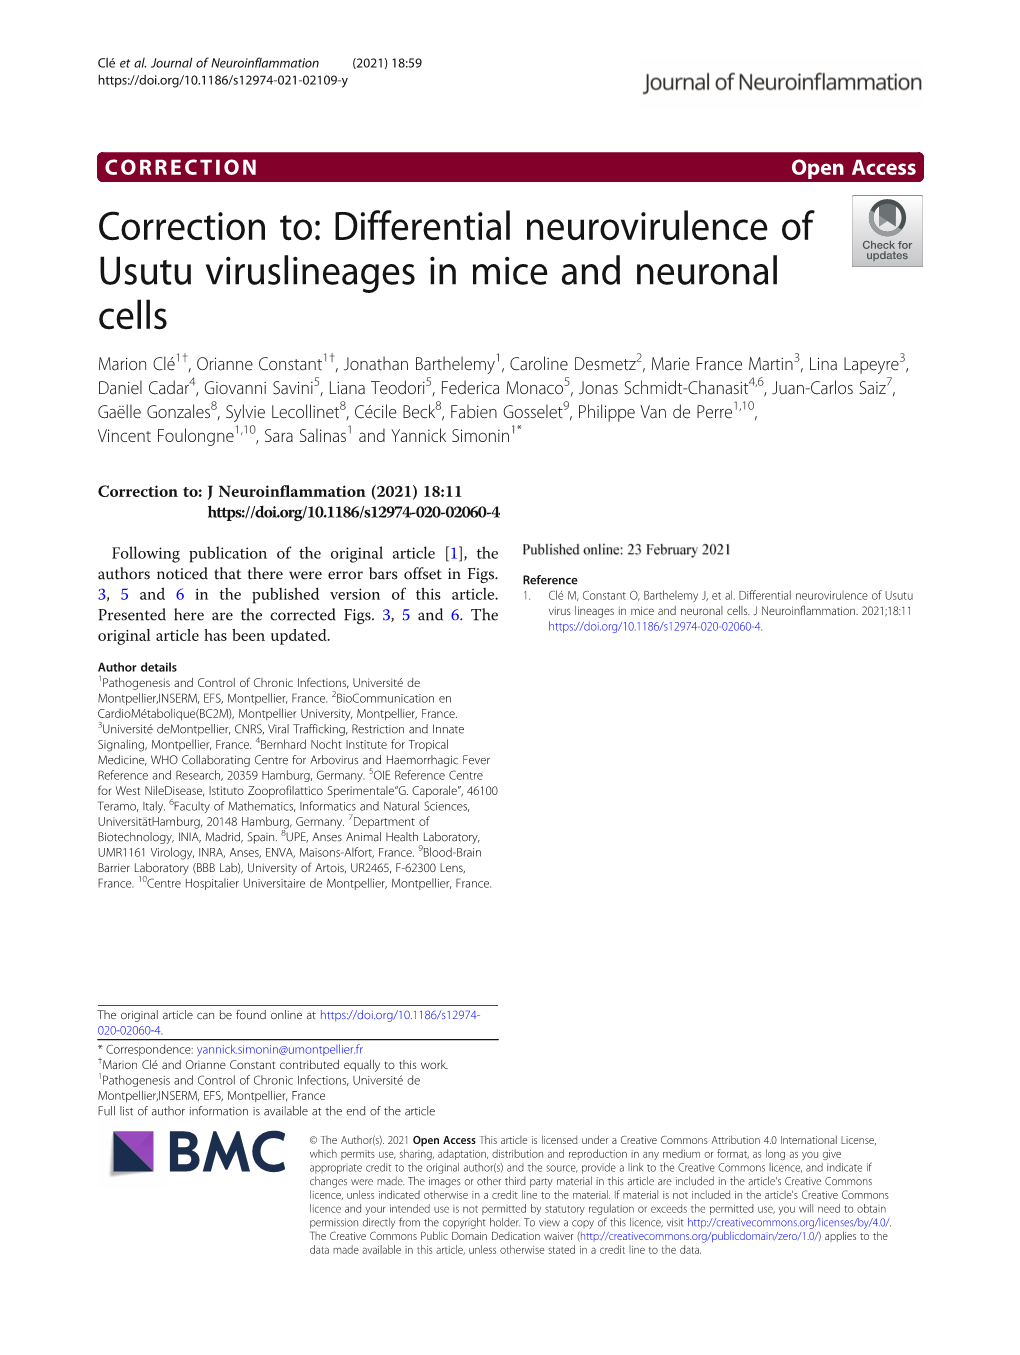 Differential Neurovirulence of Usutu